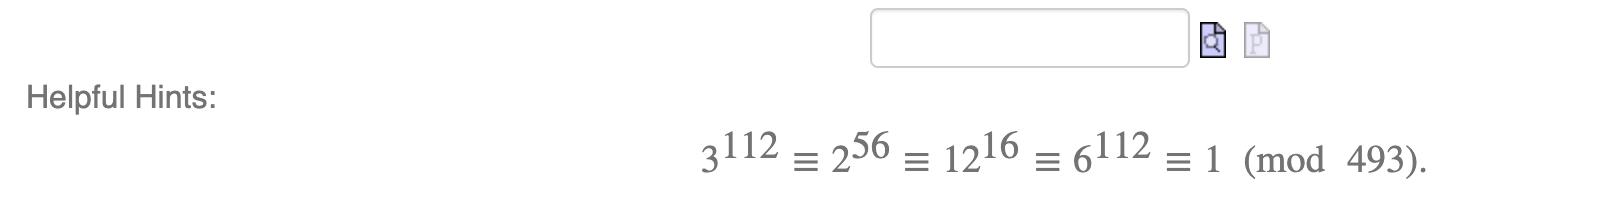 Helpful Hints: 3112 = 256 = 1216 = 6112 = 1 (mod 493).